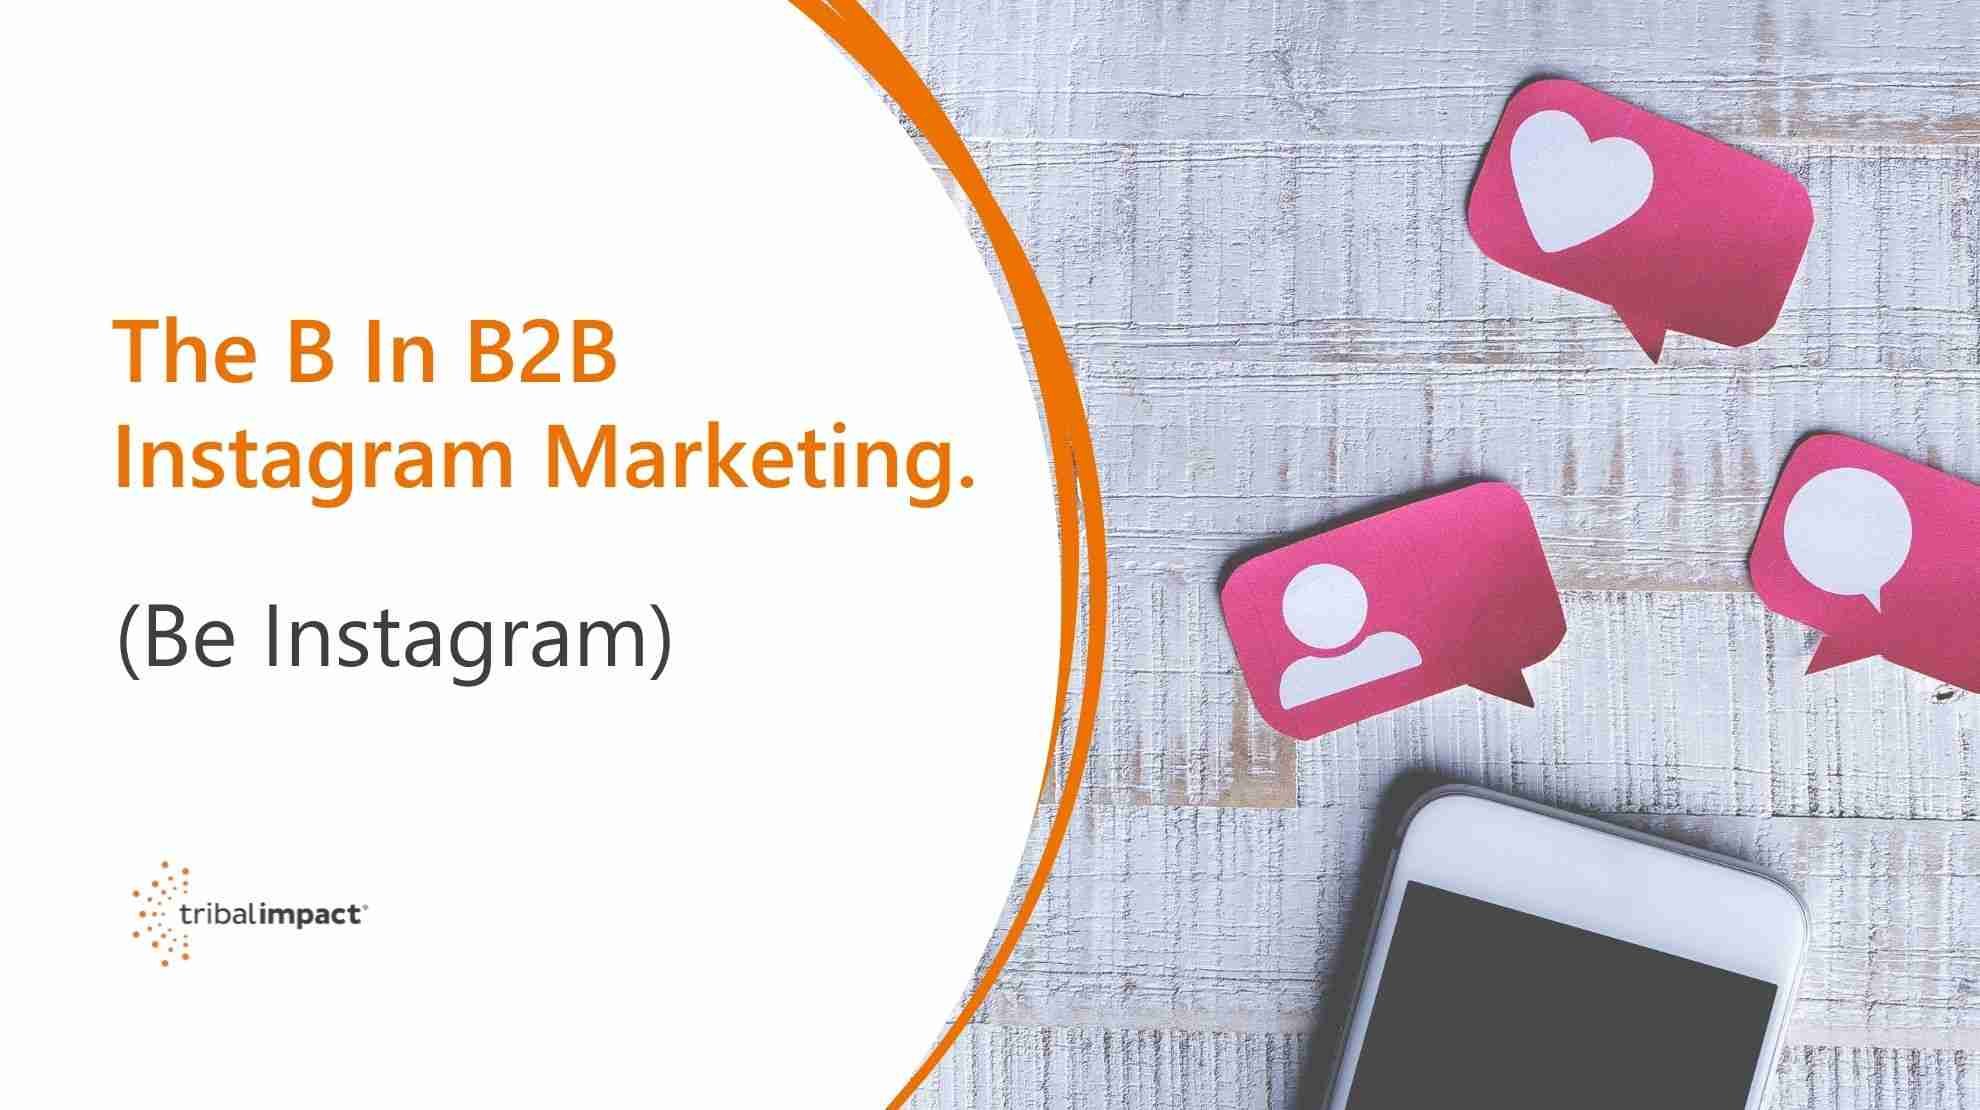 The B in The B in B2B Instagram Marketing – Be Instagram